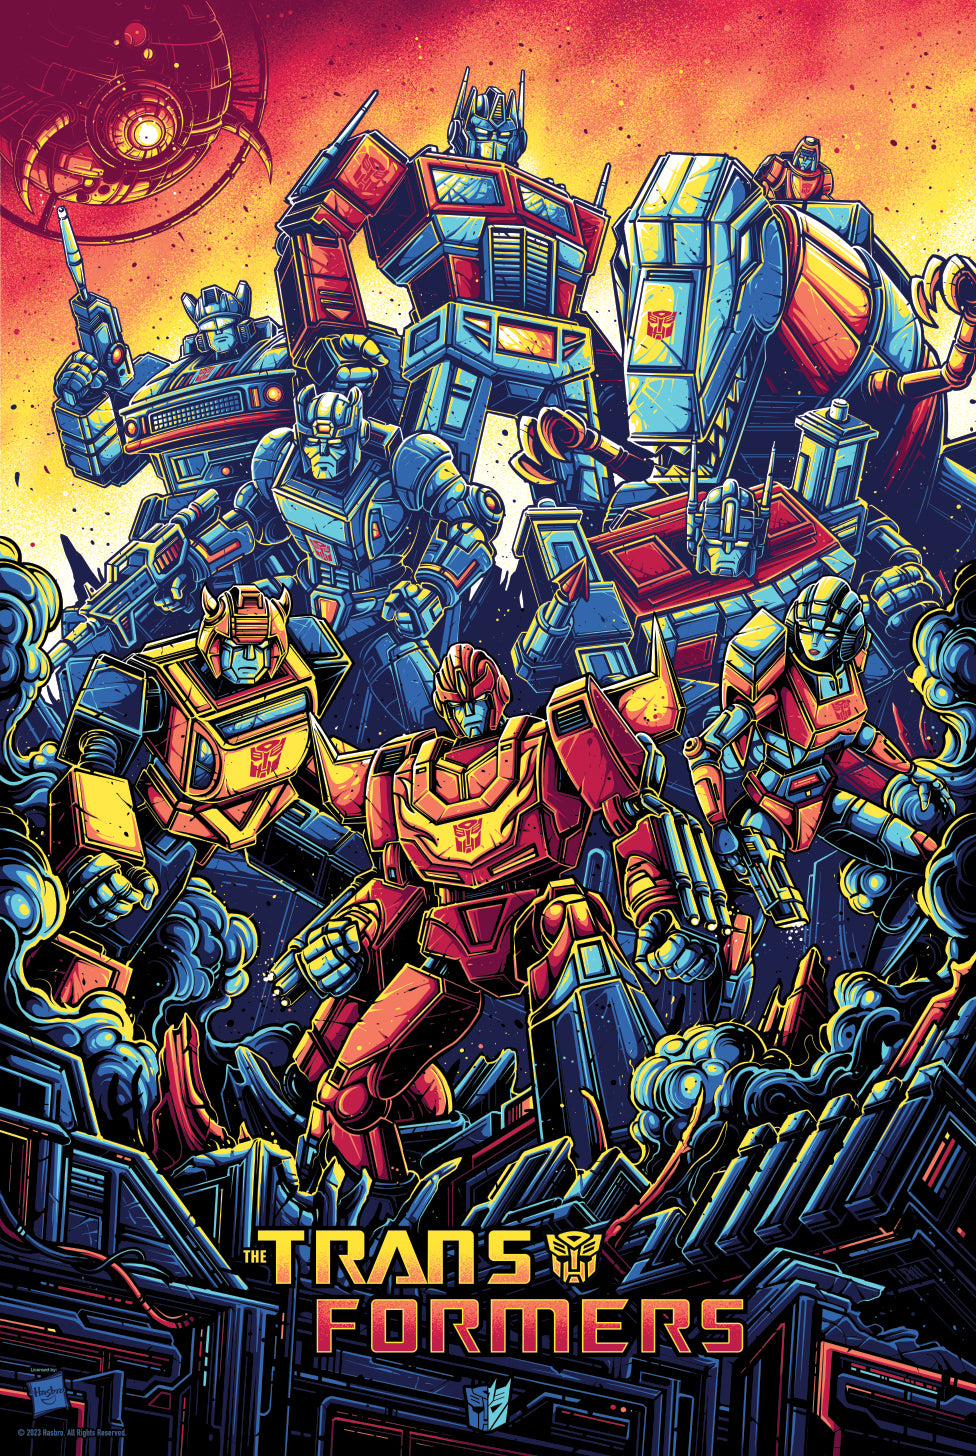 Dan Mumford "The Transformers (Autobots v Decepticons)" SET